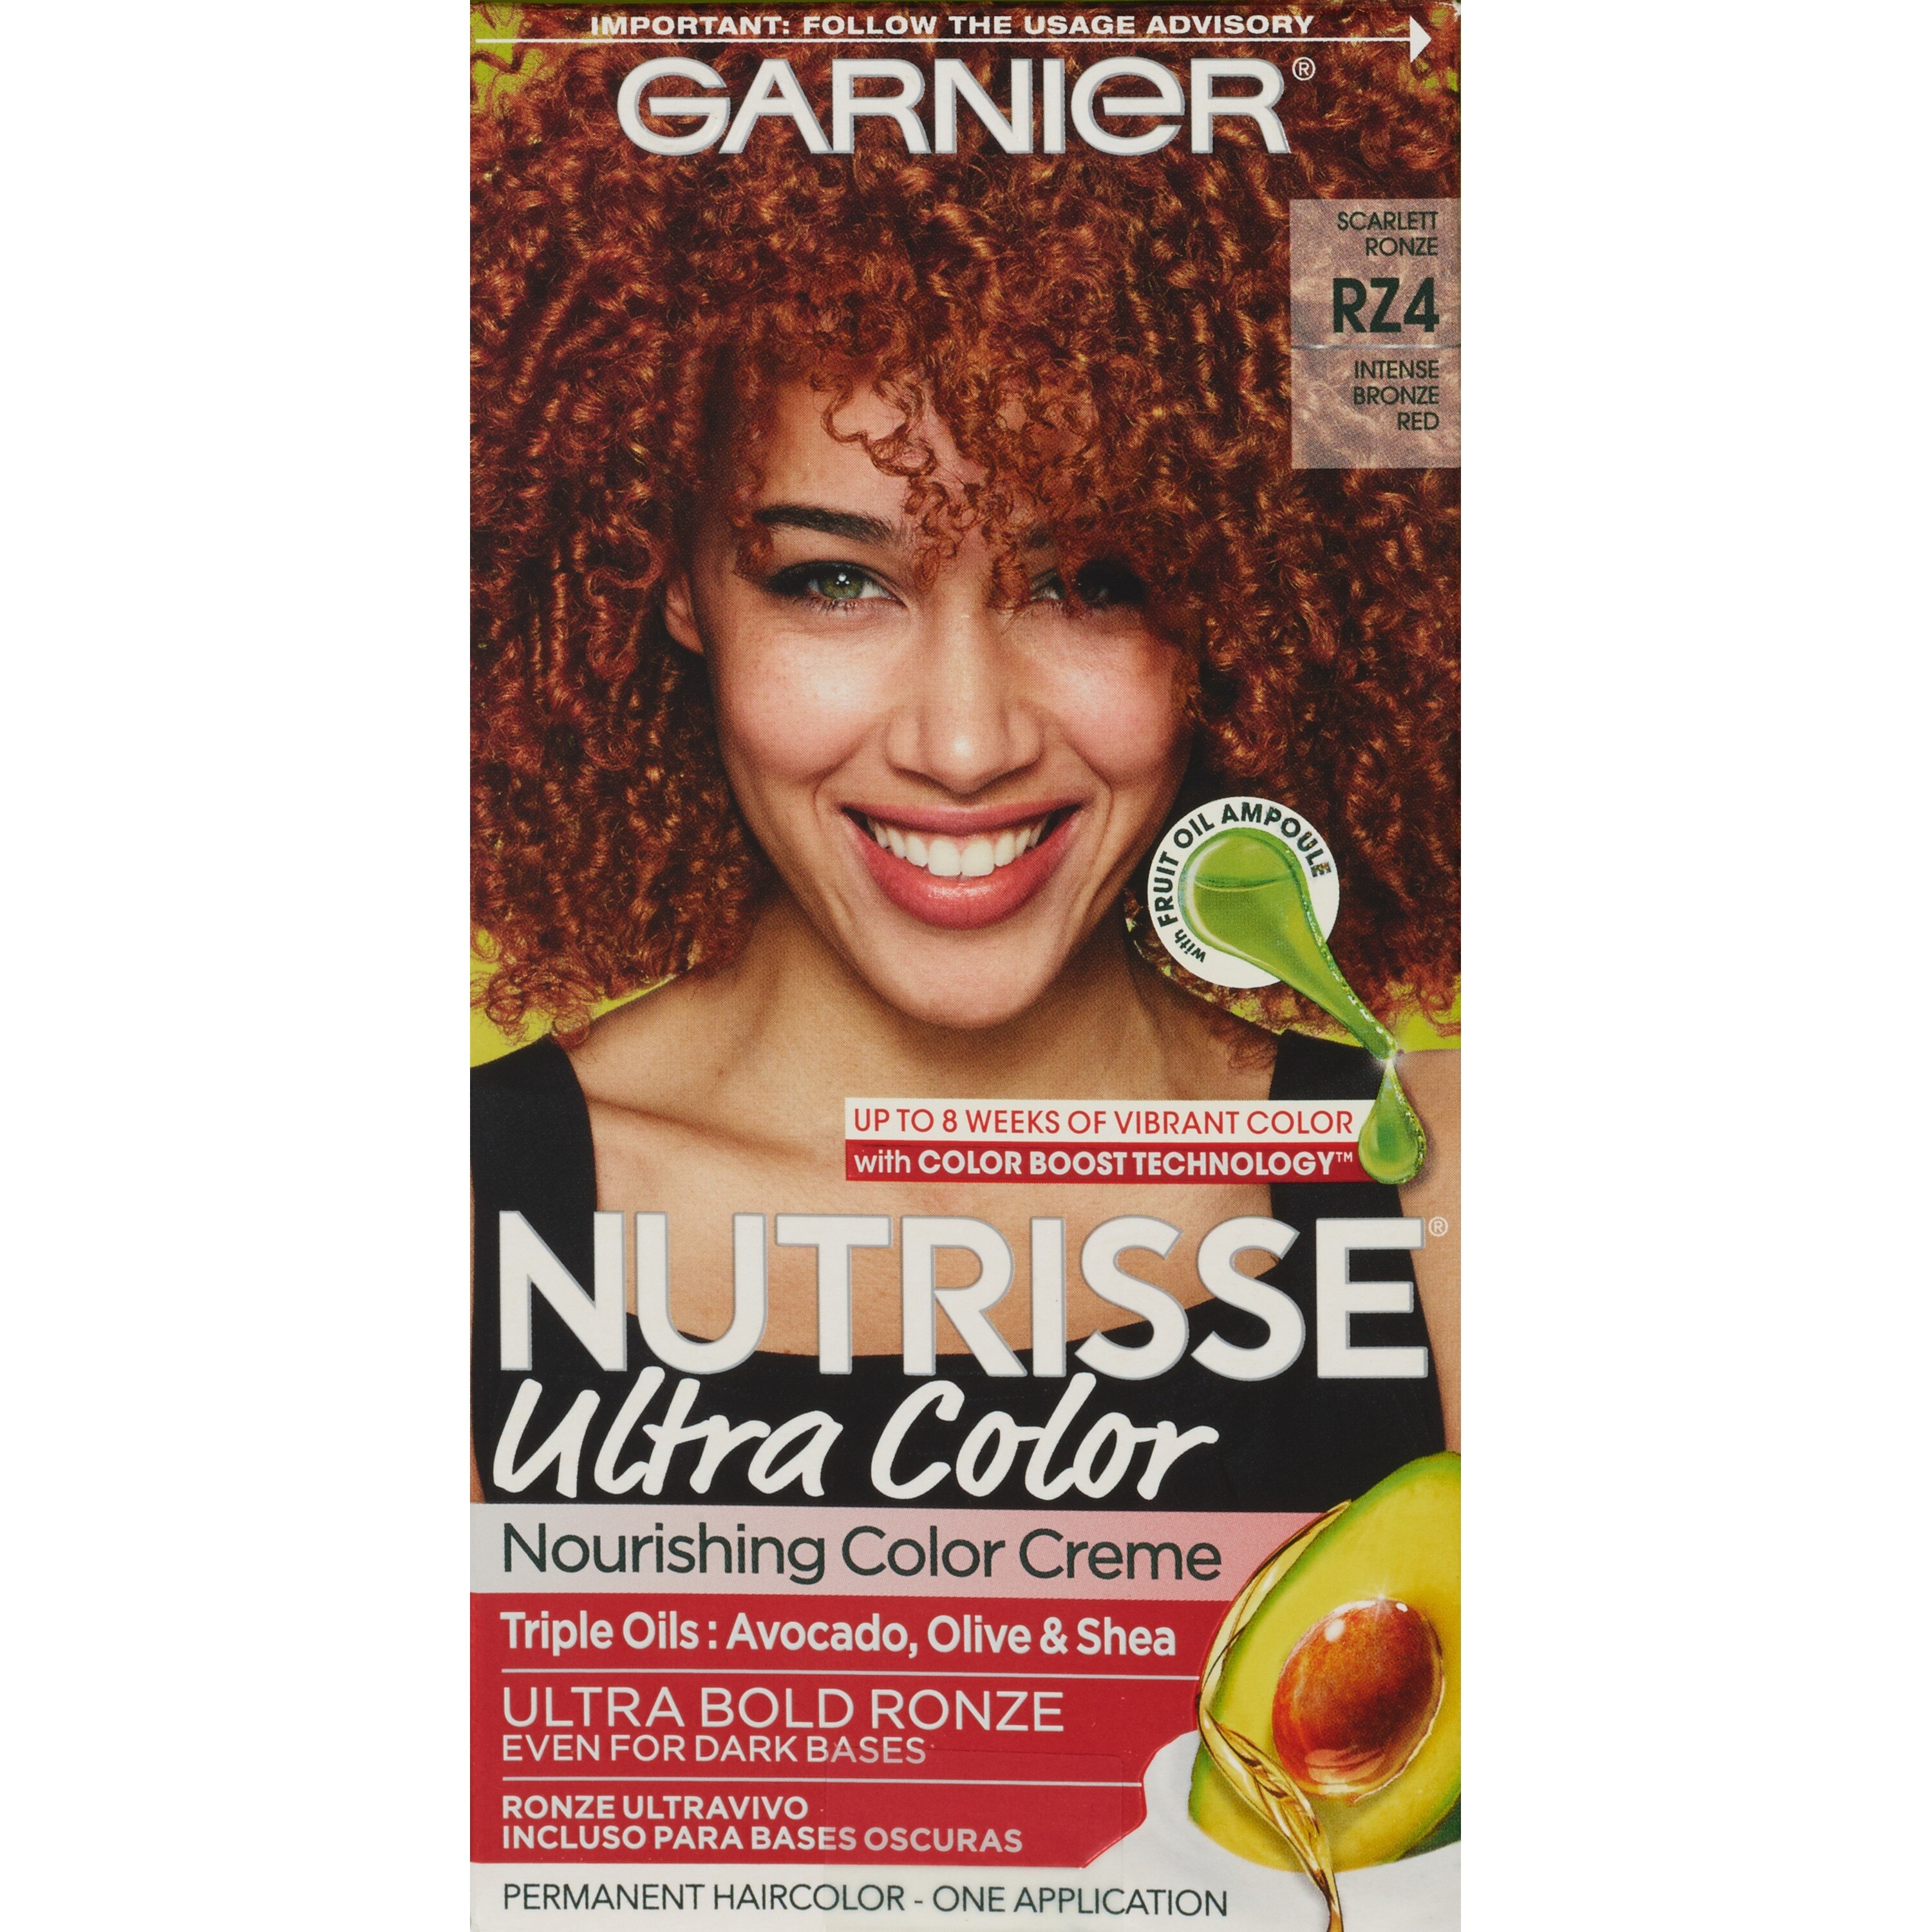 Maand Plantage Heerlijk Garnier Nutrisse Ultra Color Nourishing Hair Color Creme | Pick Up In Store  TODAY at CVS